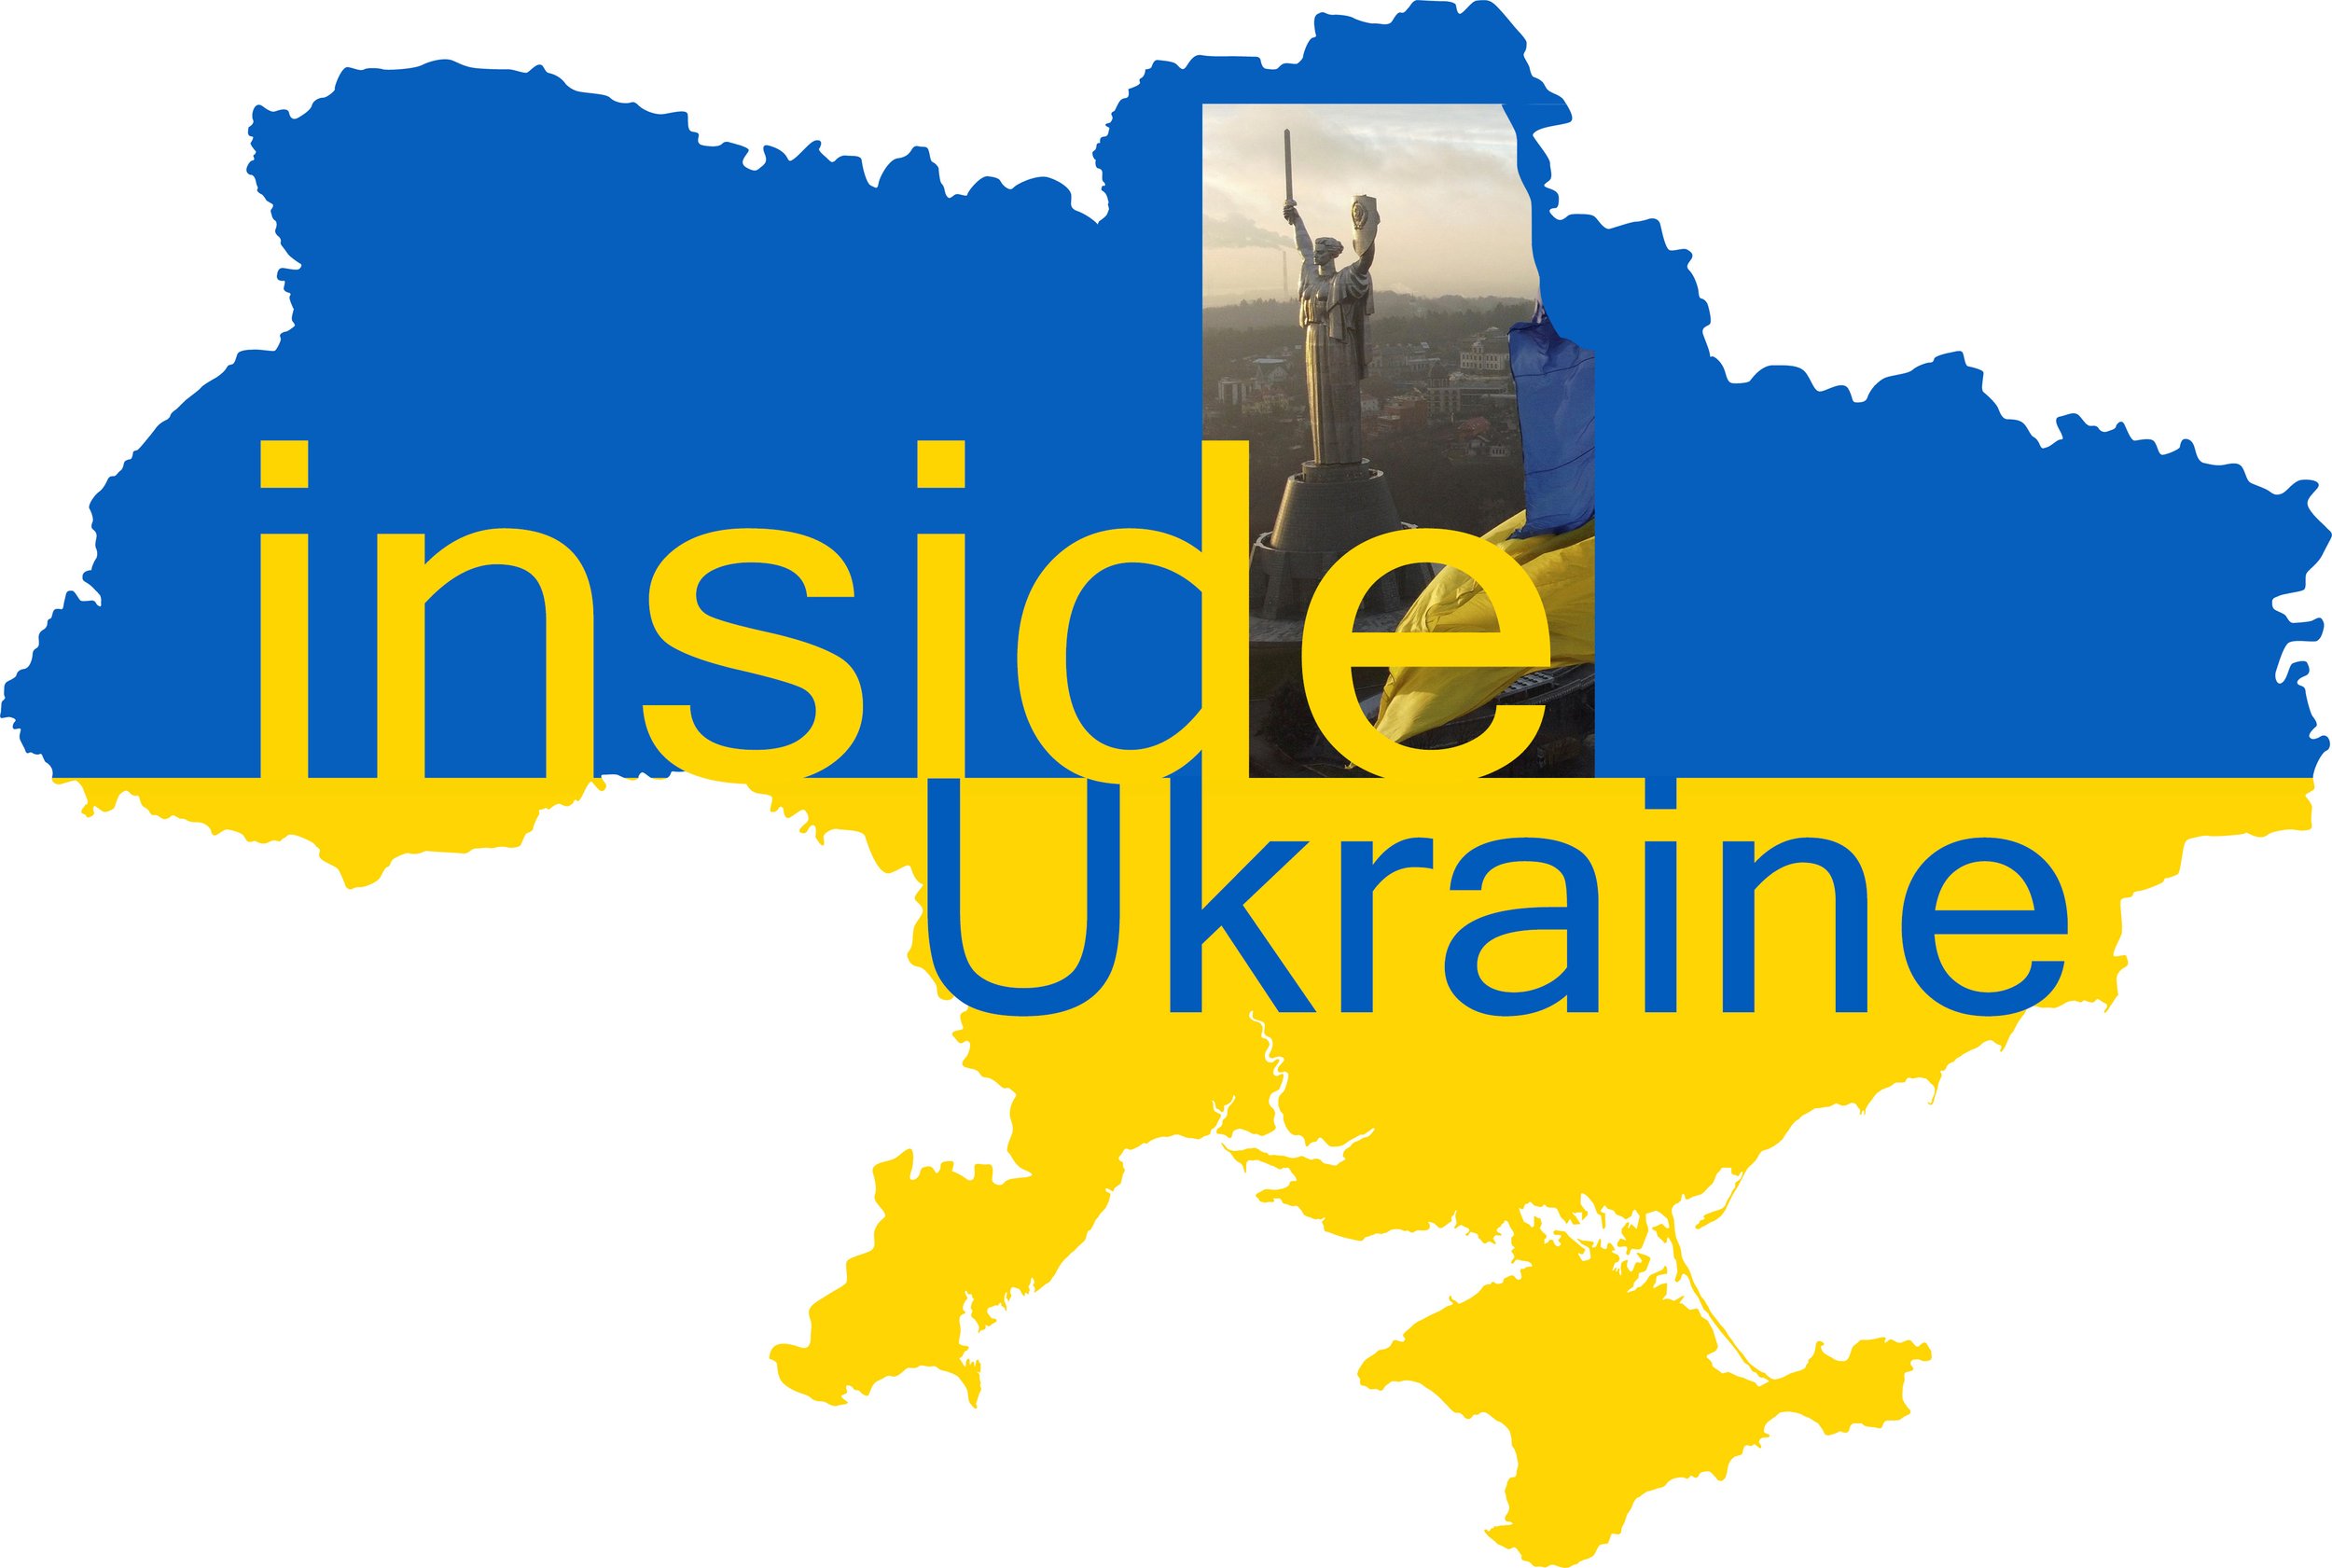 Outline_of_Ukraine Warrior FINAL.jpg